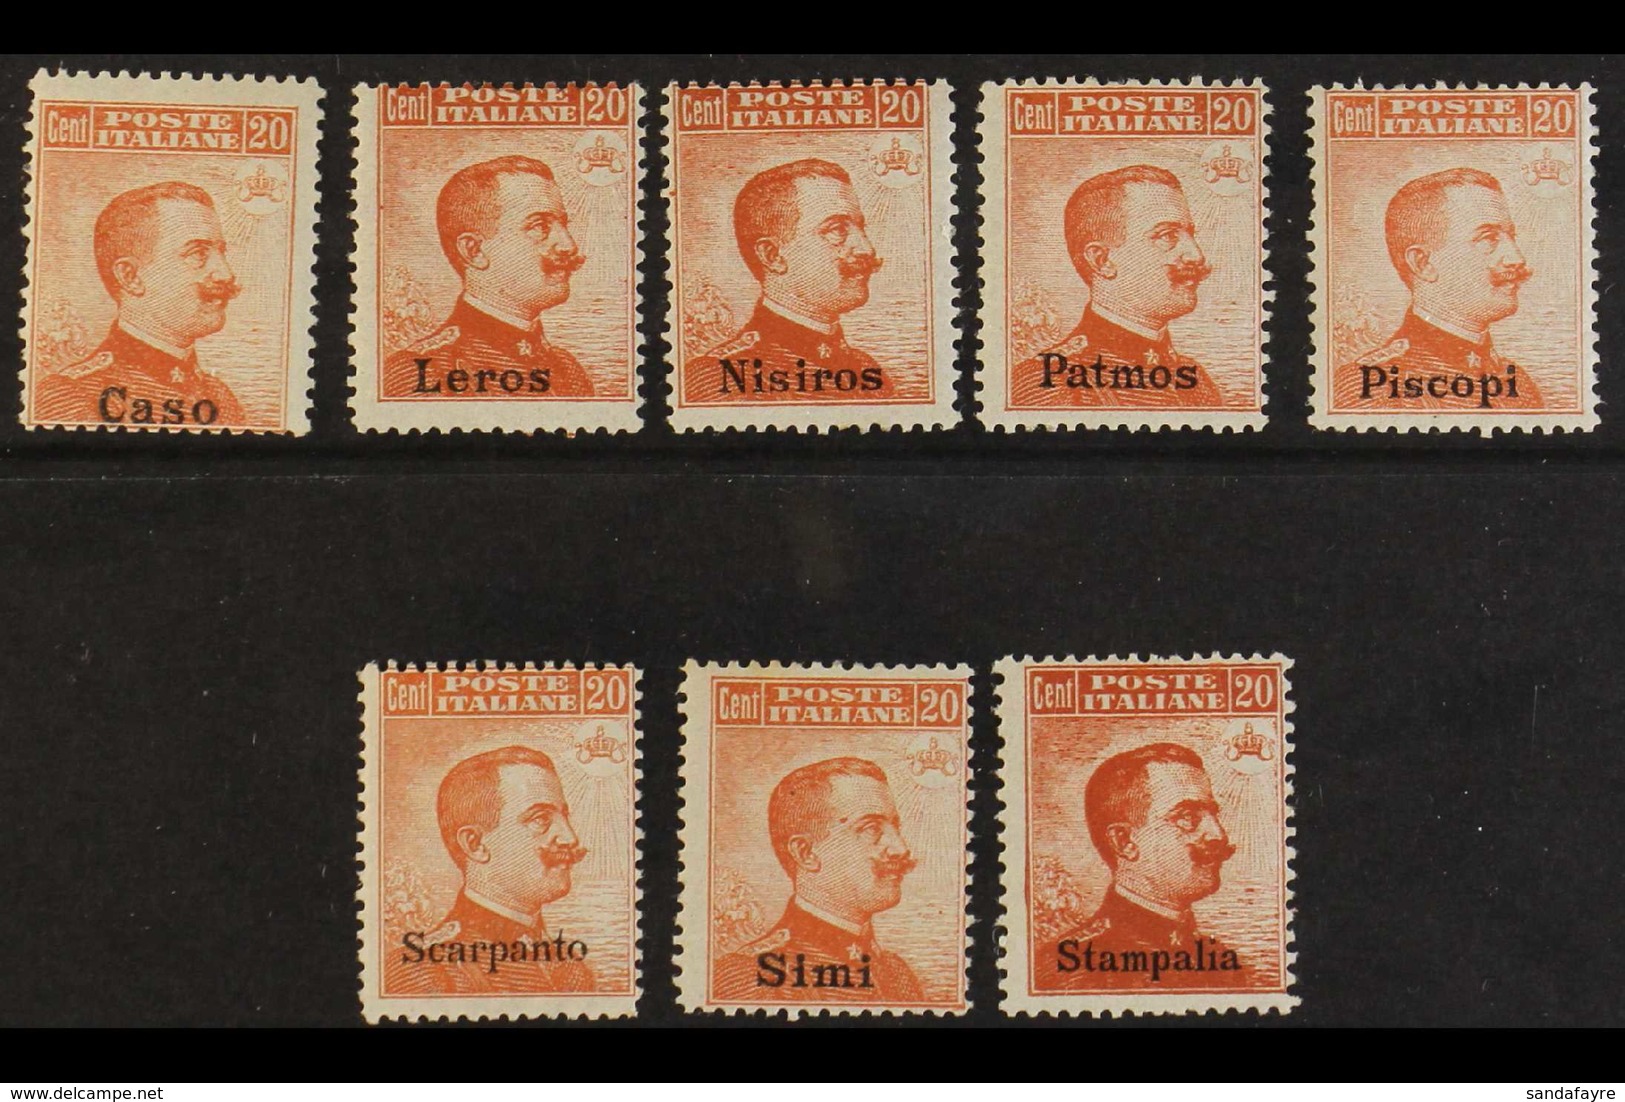 1917 20c Orange, No Watermark Ovptd Issues From Caso, Leros, Nisiros, Patmos, Piscopi, Scarpanto, Simi & Stampalia, Sass - Aegean